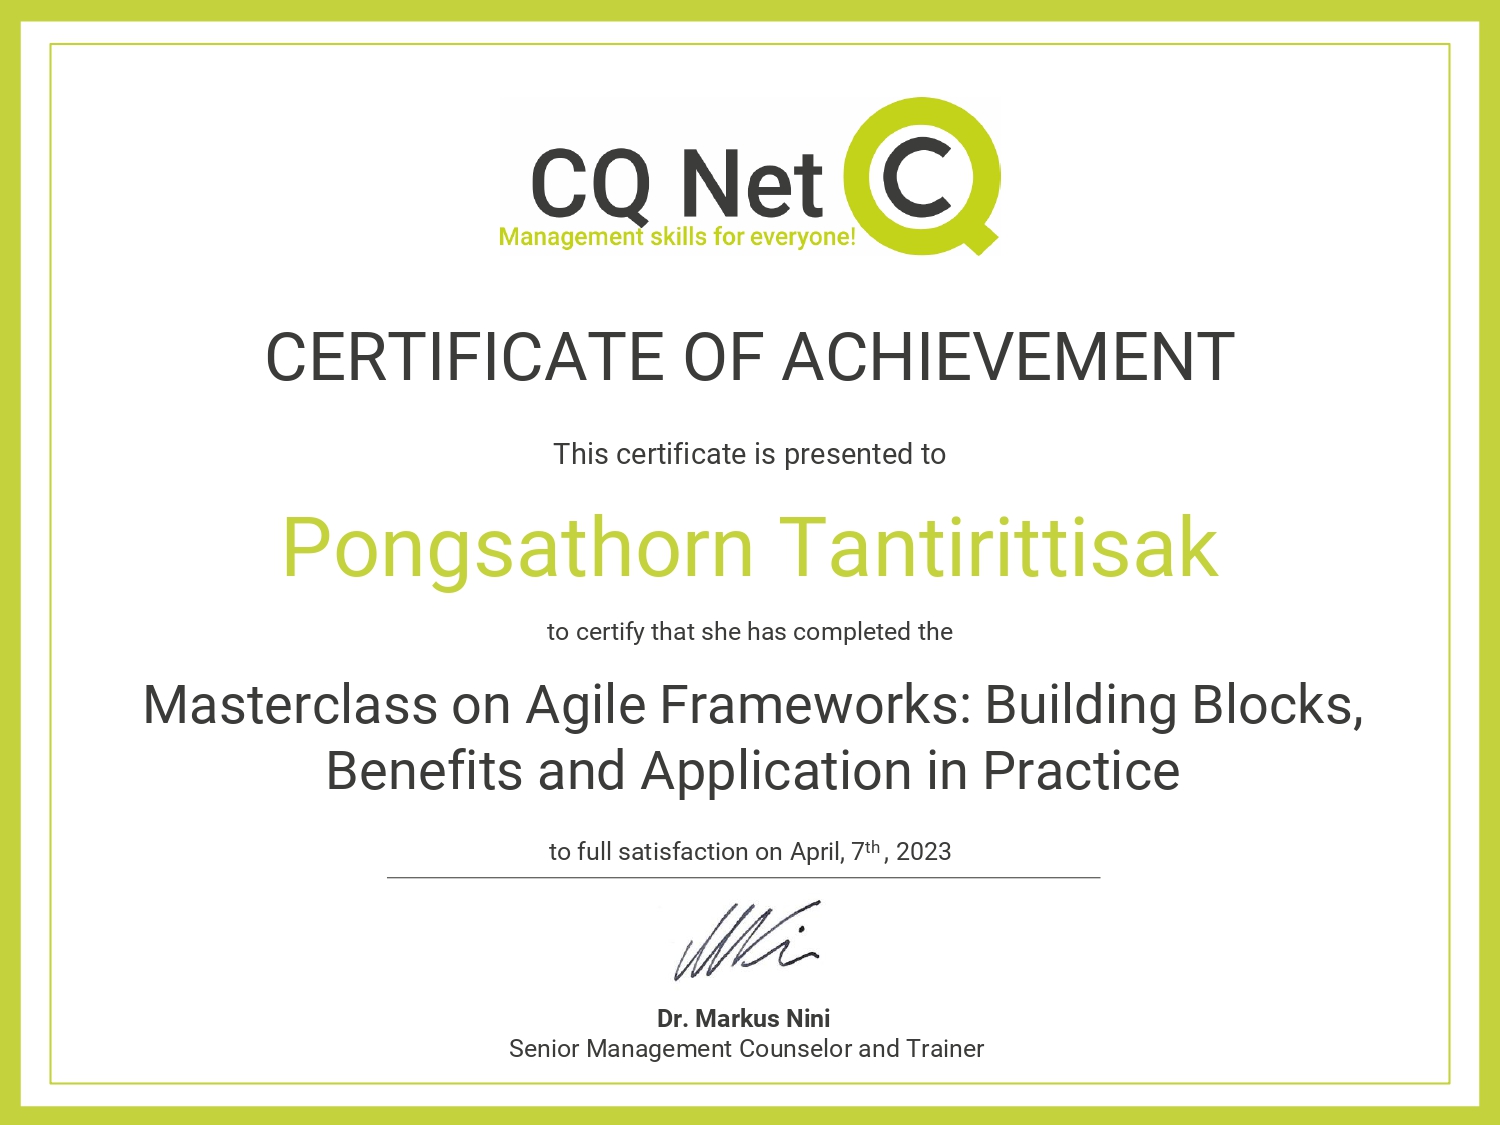 23-04-07-Certificate_Pongsathorn_Tantirittisak_Agile-Frameworks_page-0001